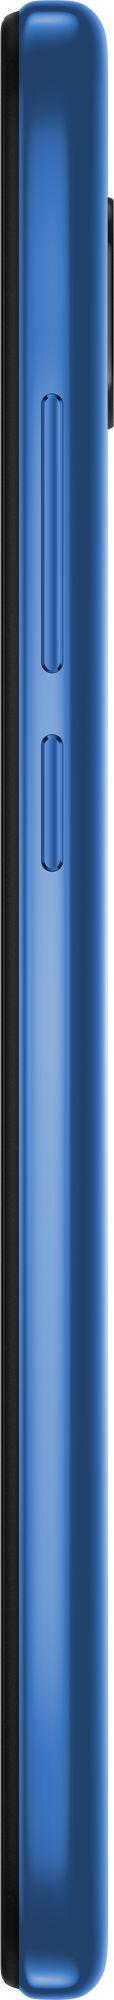 Смартфон Xiaomi Redmi 8 3/32Gb Sapfire Blue заказать